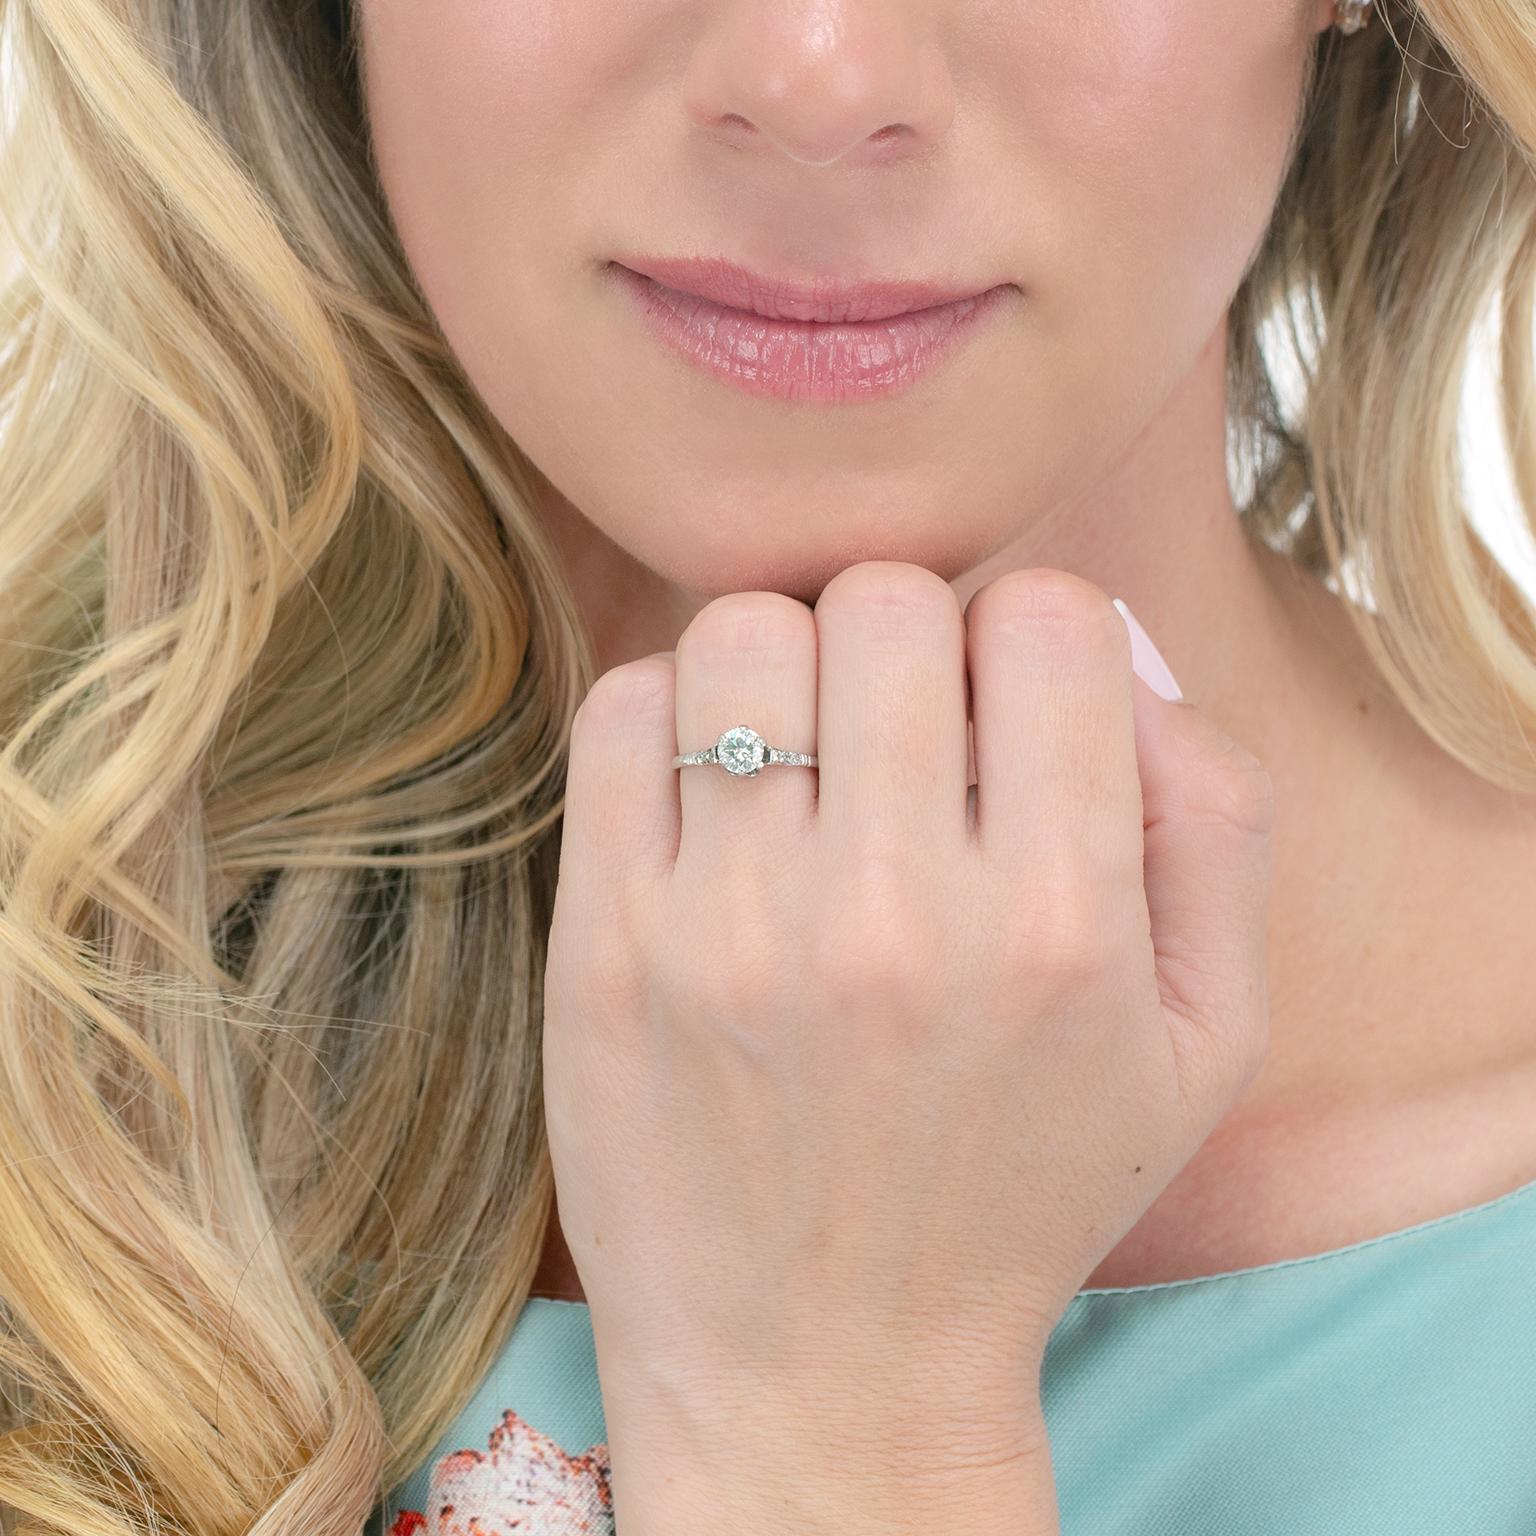 Women's Art Deco Platinum Diamond Engagement Ring